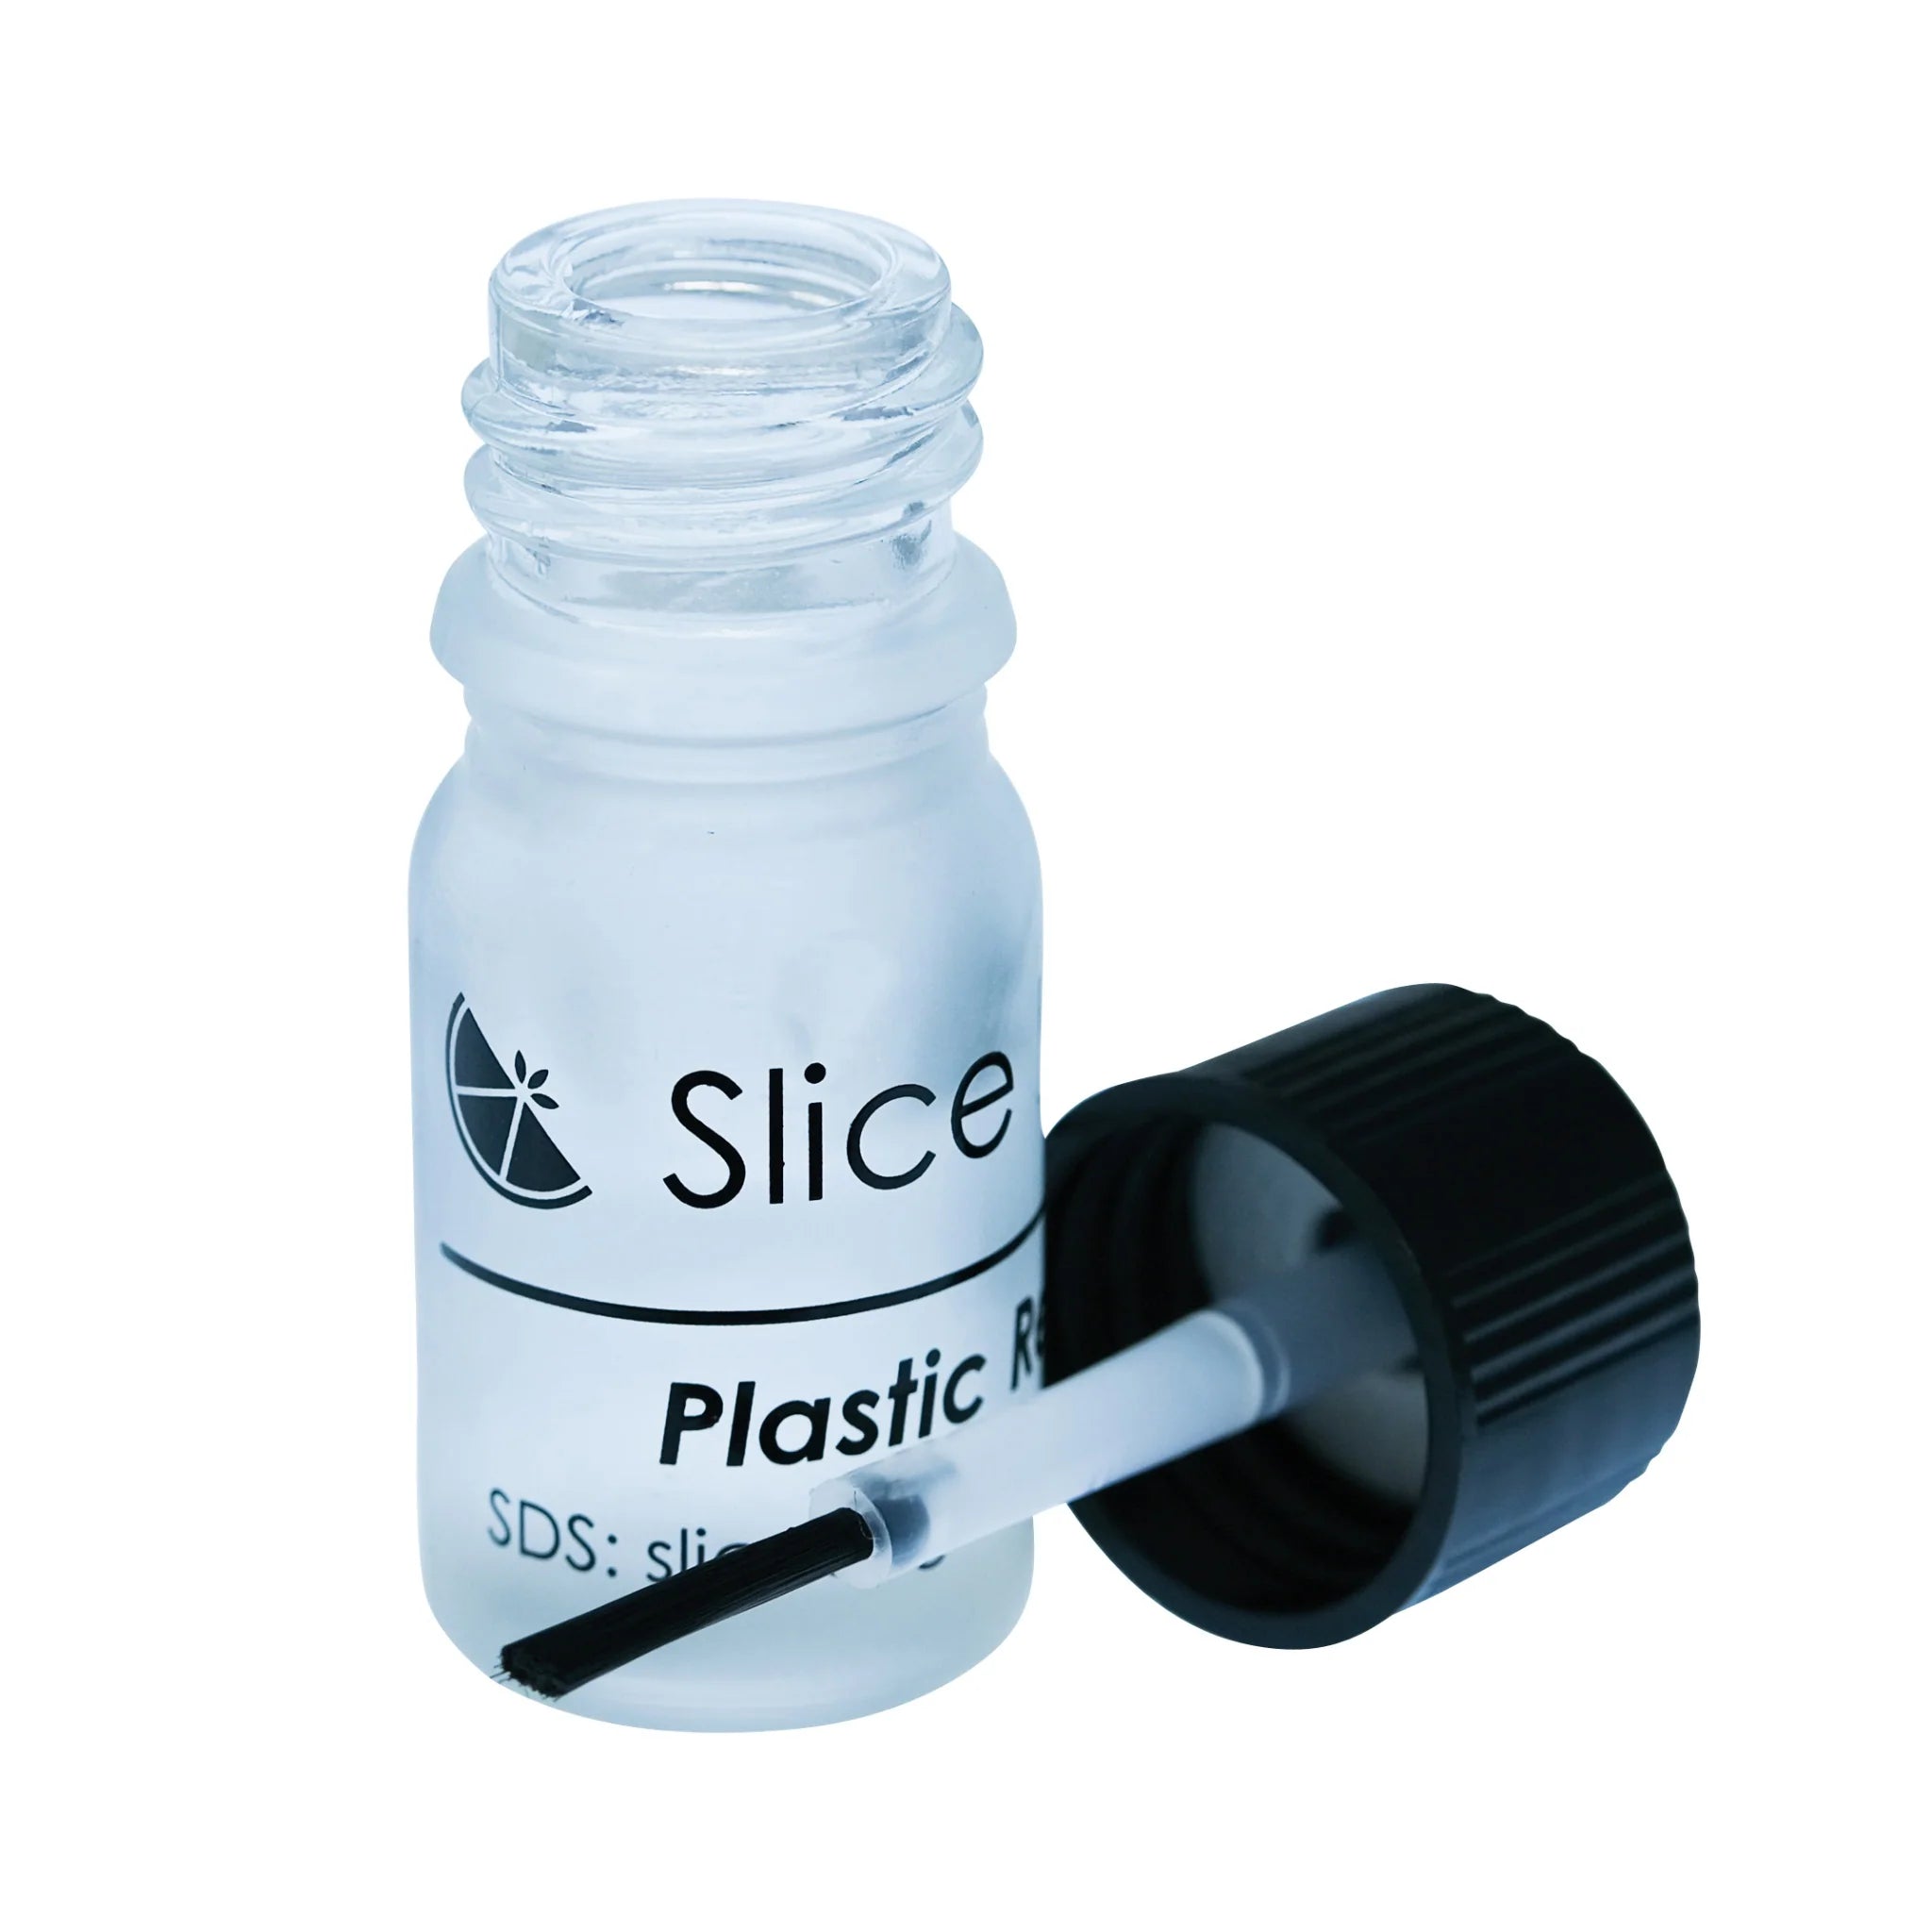 Plastic Repellent Paint™ - Slice Engineering